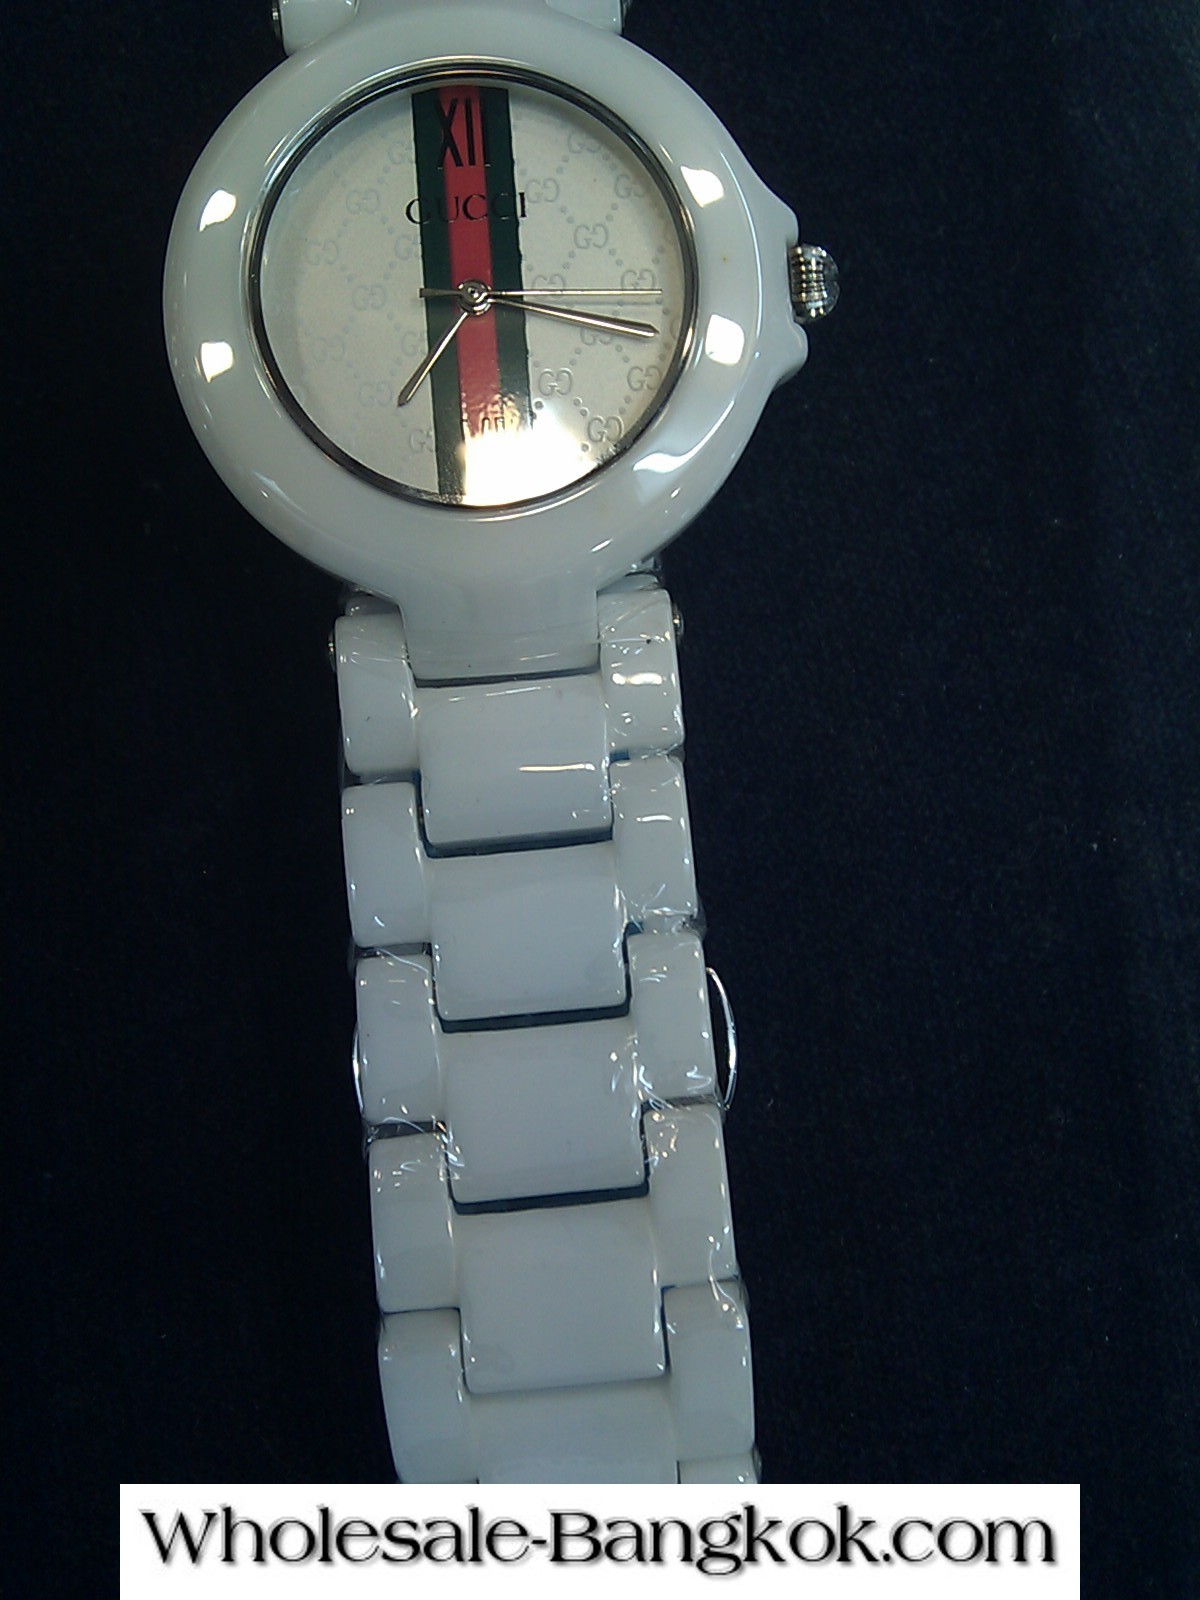 white gucci watch